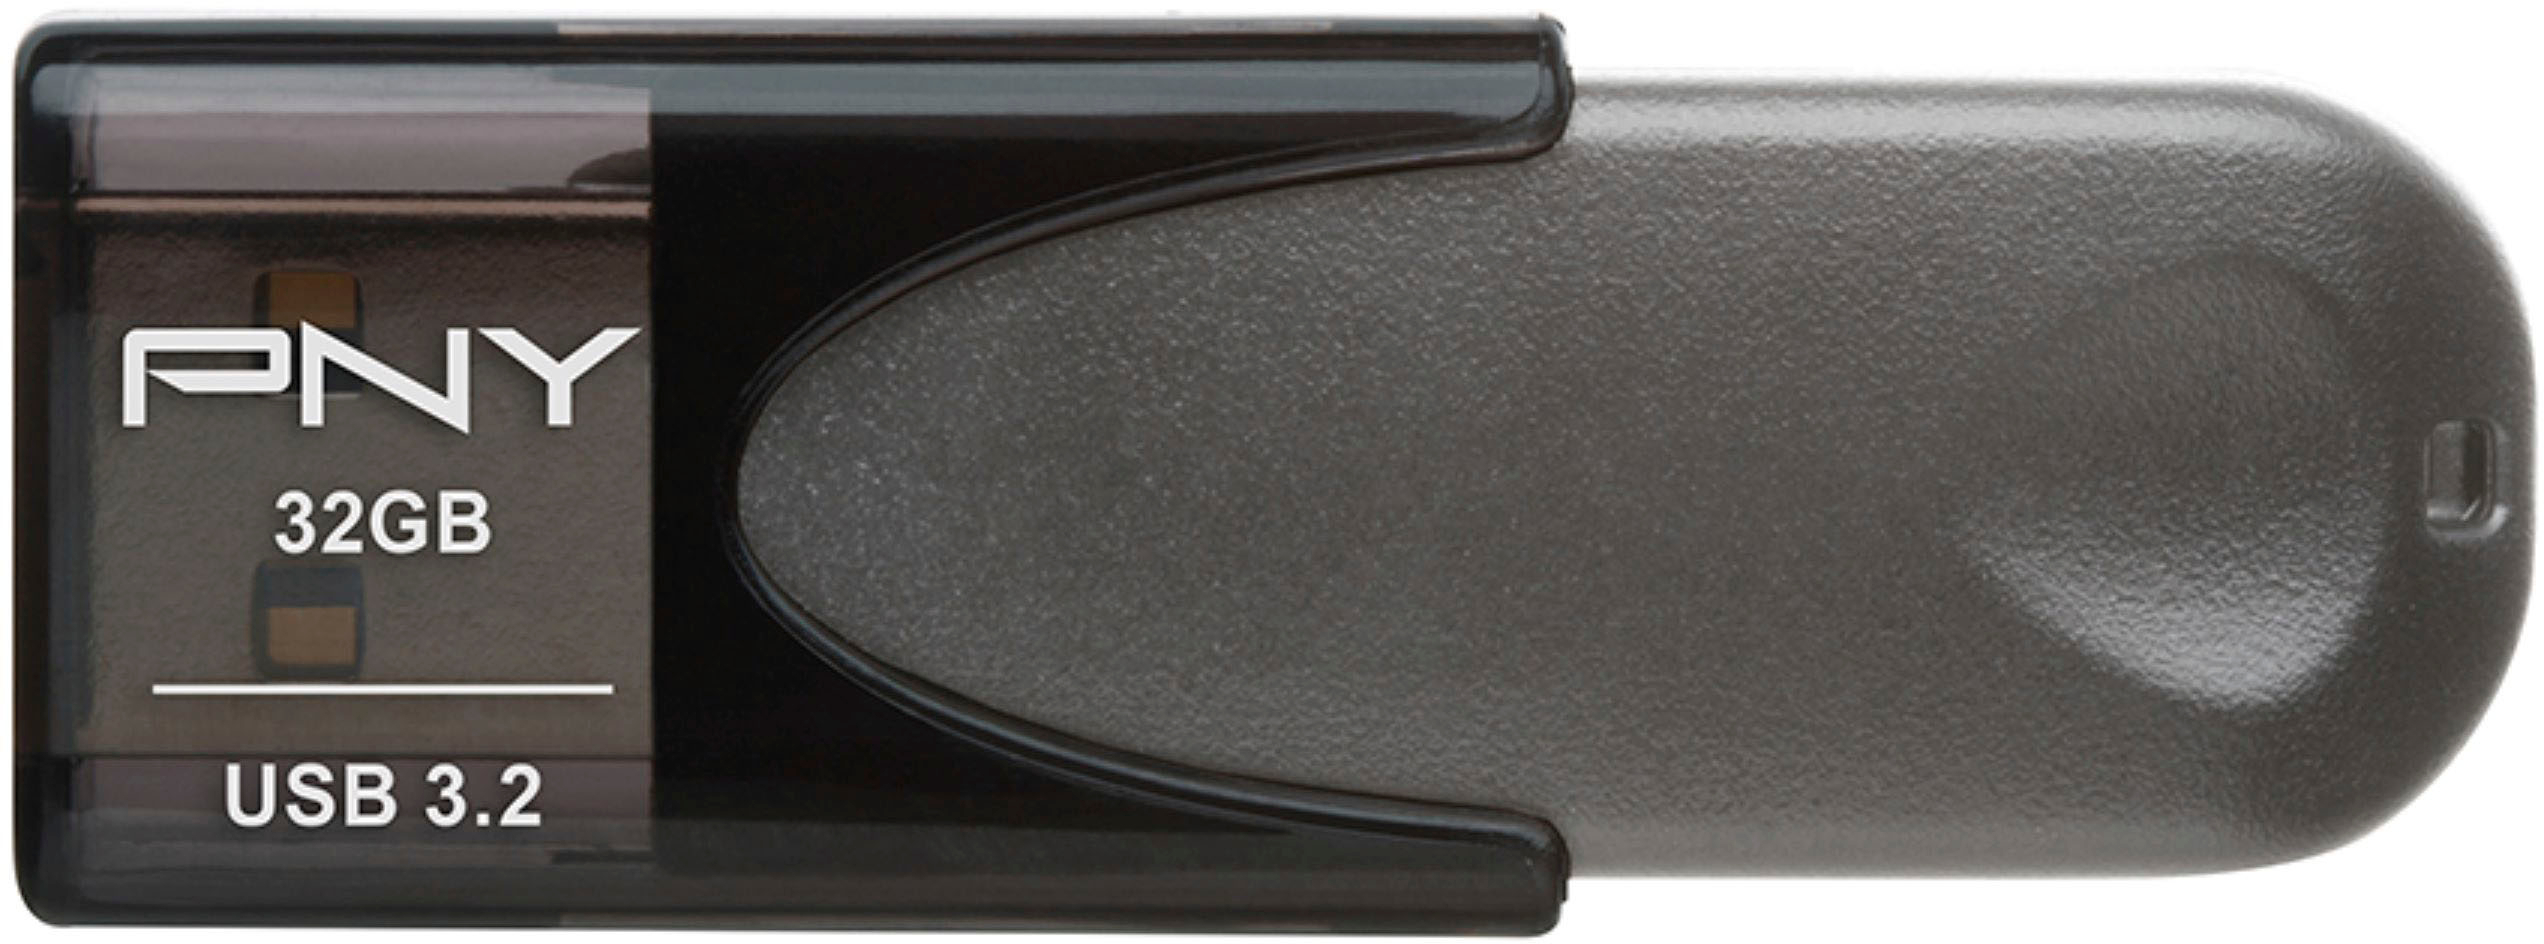 PNY - Elite Turbo Attache 4 32GB USB 3.0 Type A Flash Drive - Black/Gray